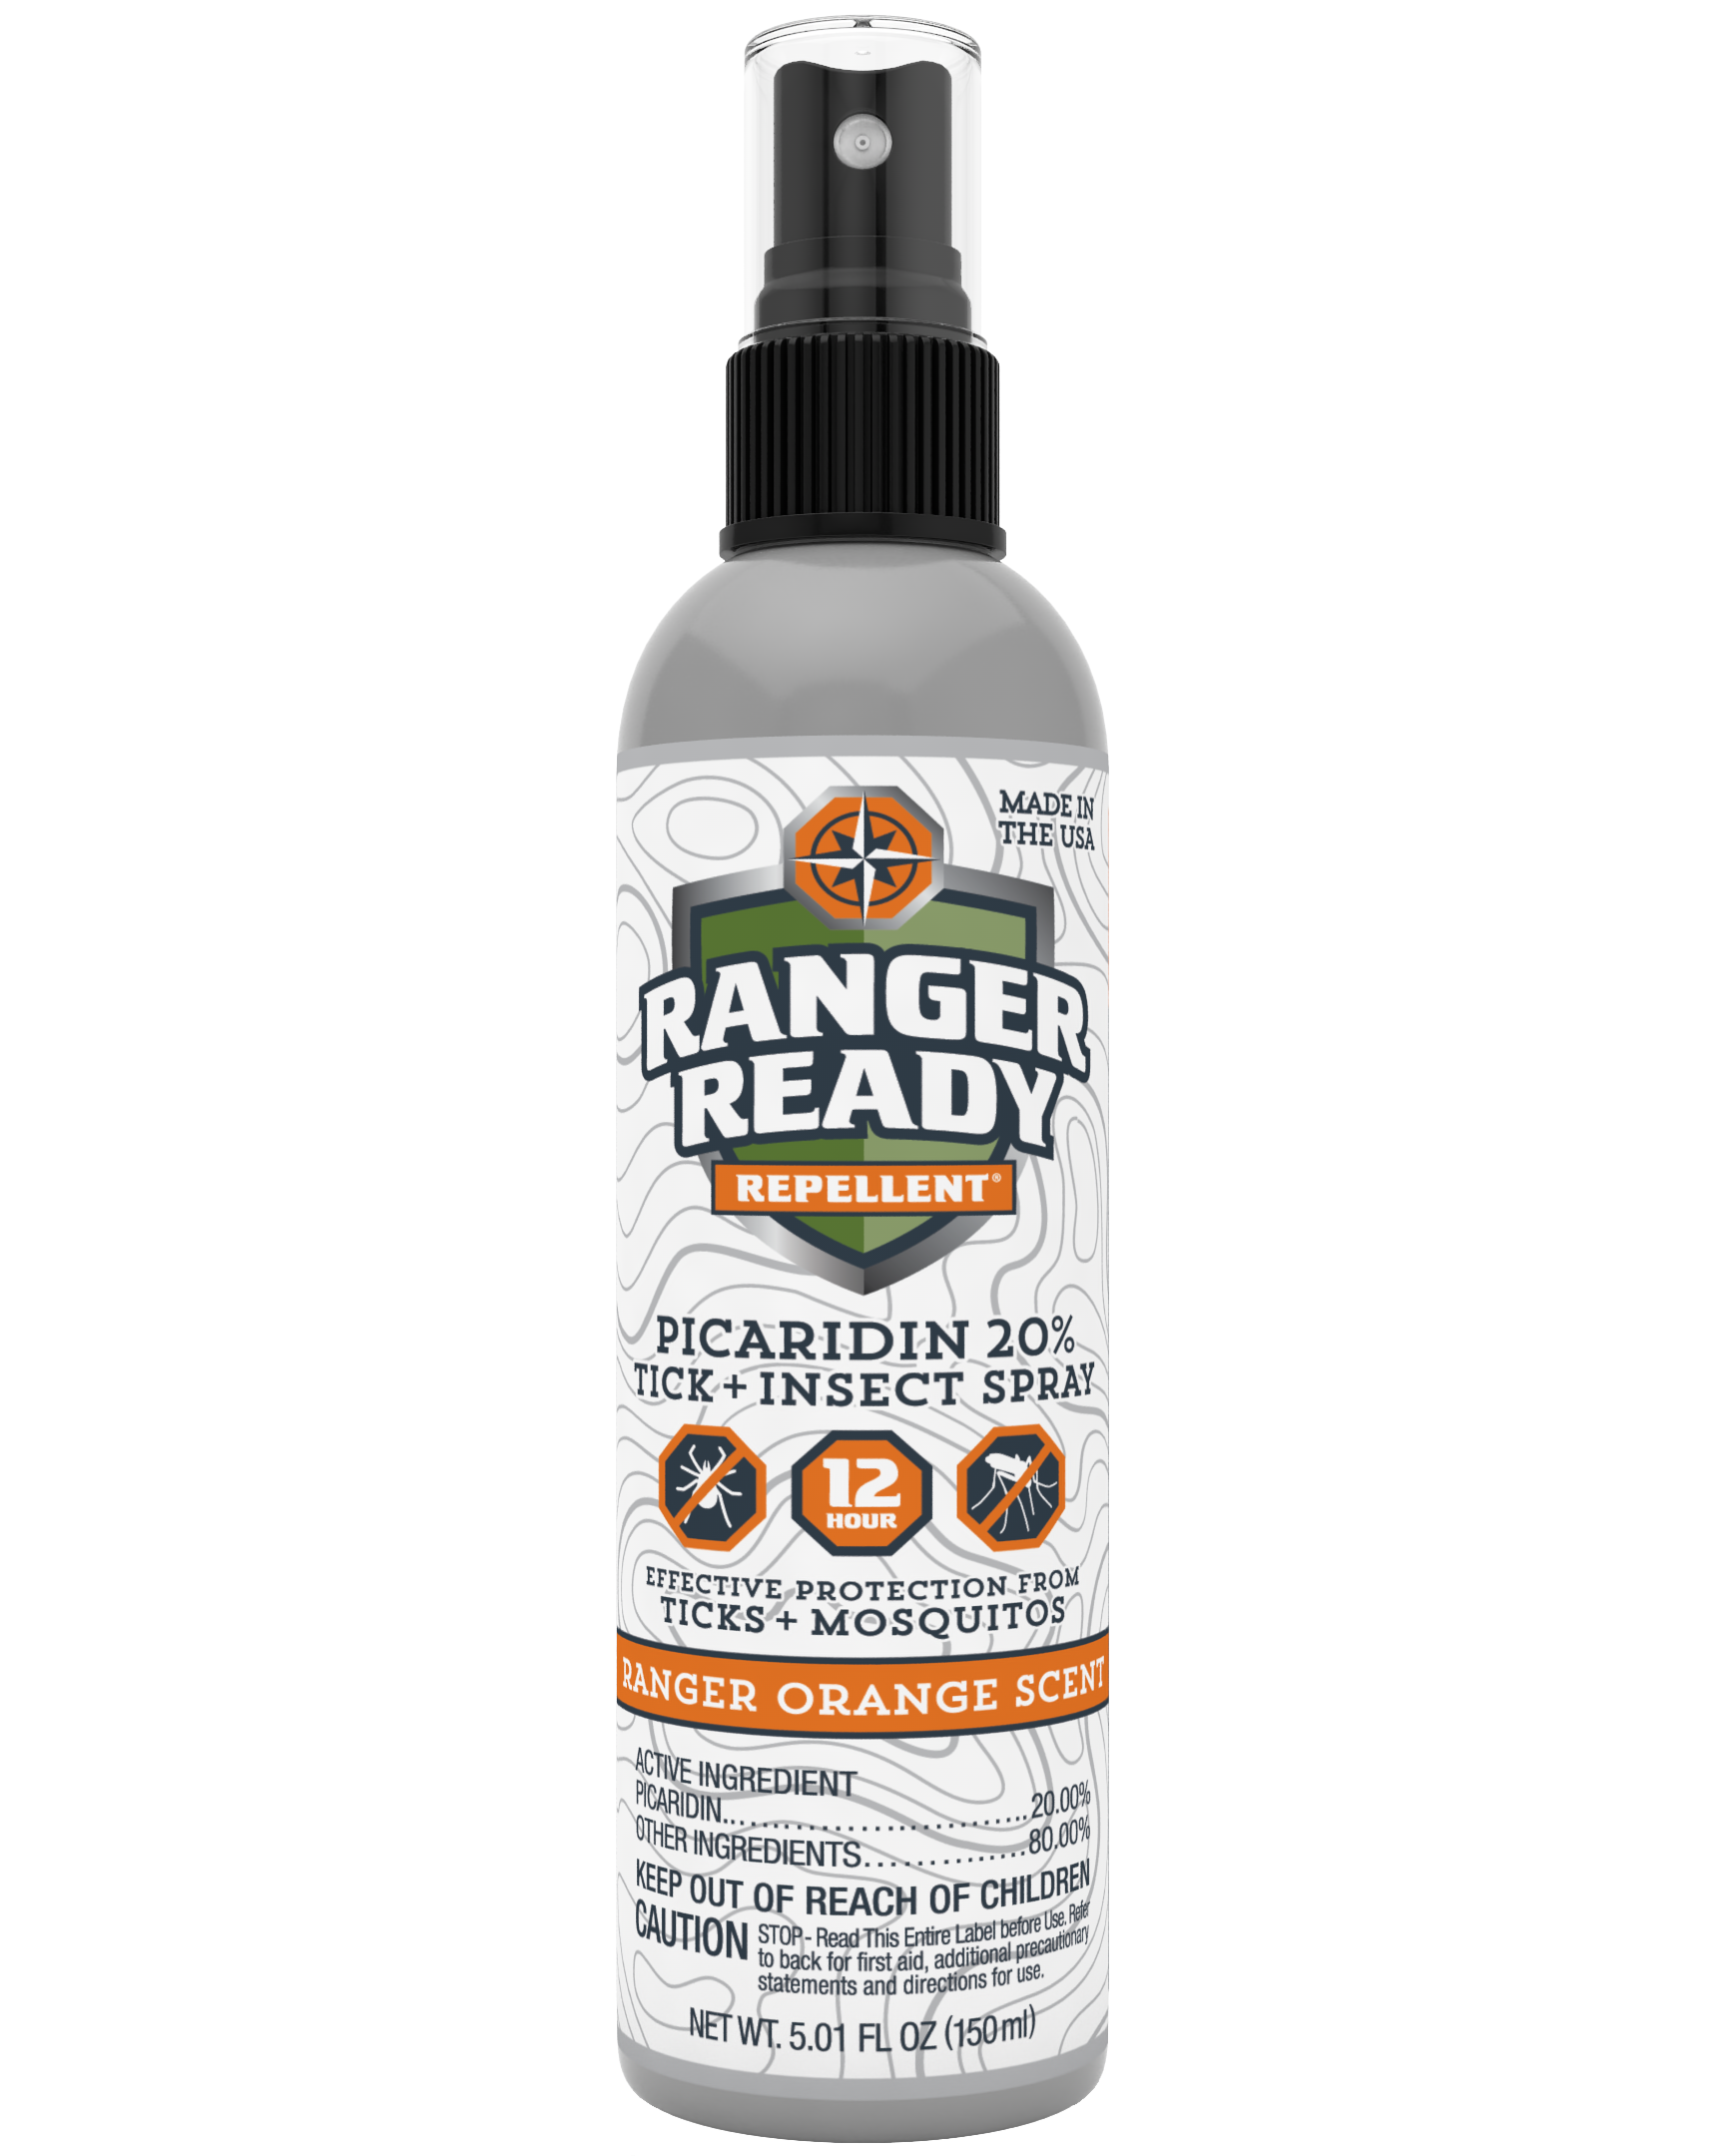 Ranger Orange scented Picaridin 20% pump spray by Ranger Ready Repellents